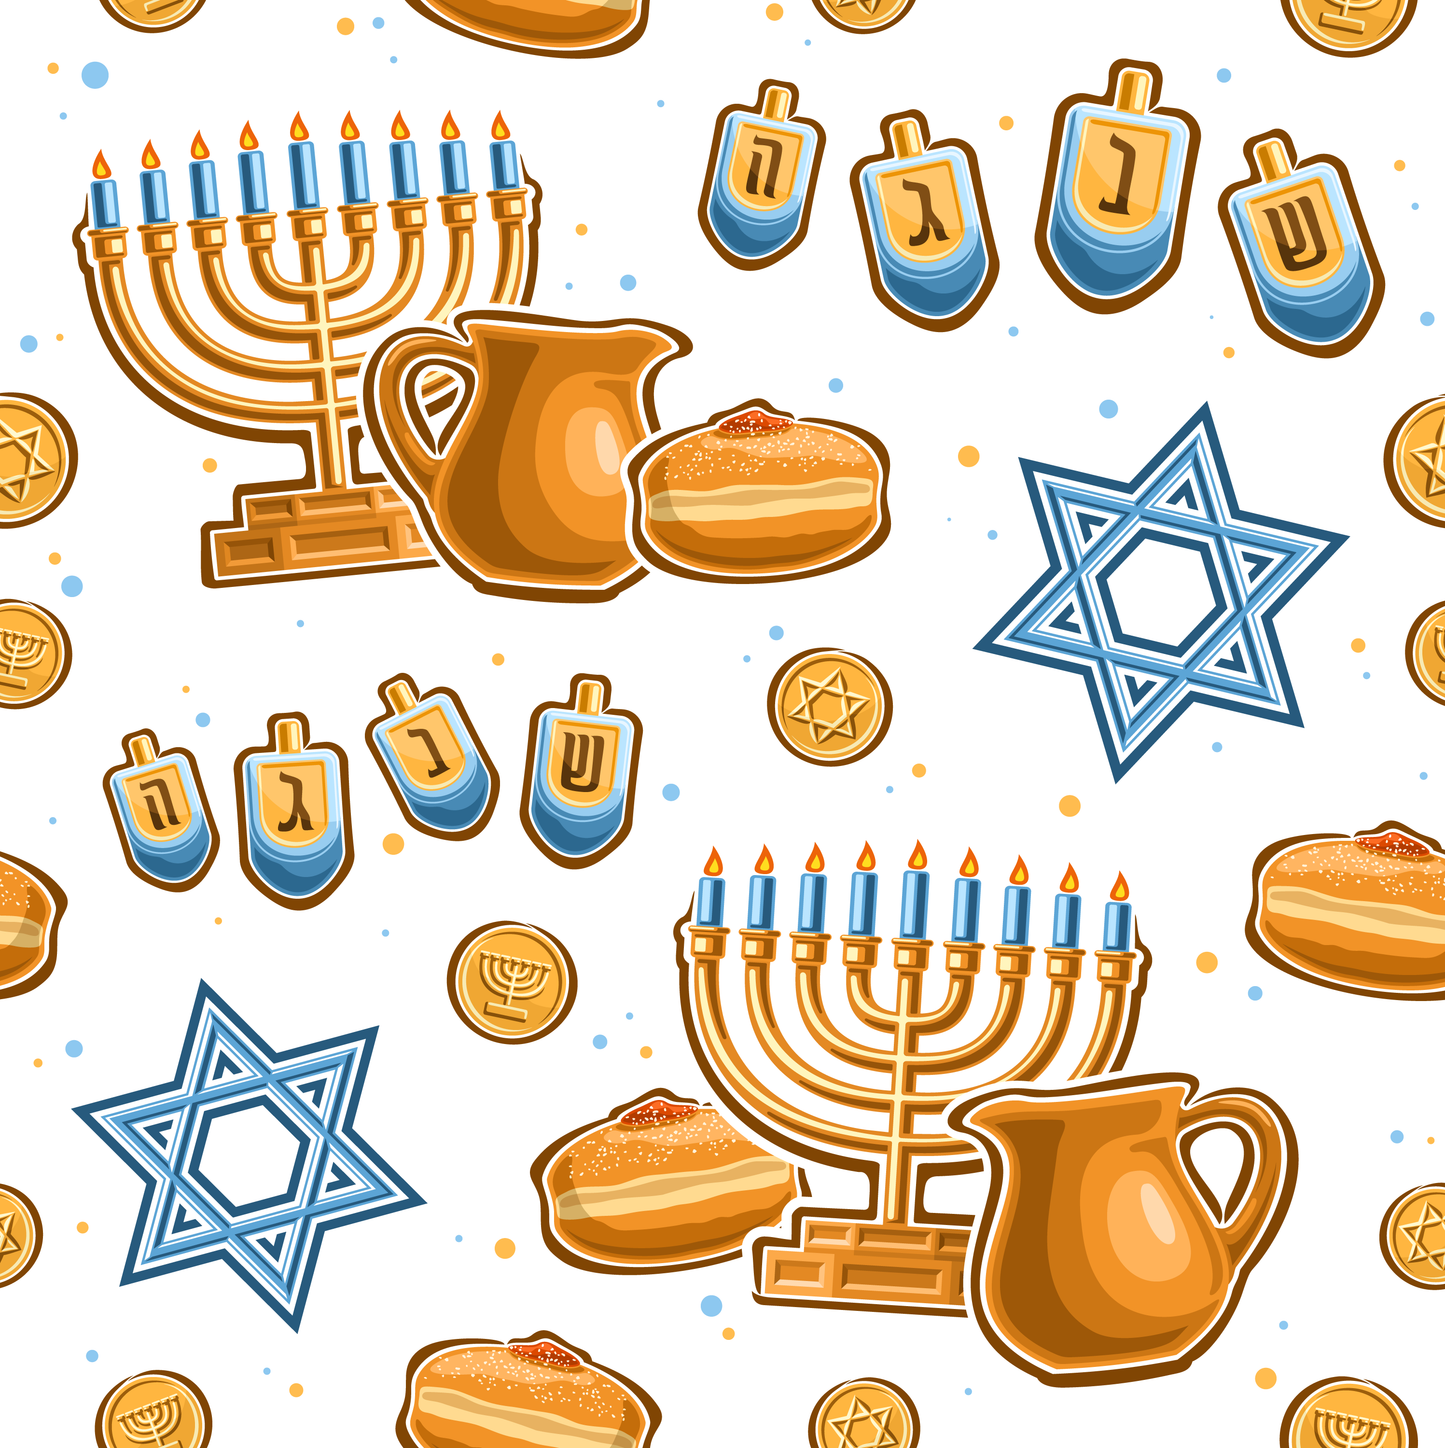 Hanukkah Festival of Lights (Faux Leather - 8" x 13" Printed Sheet)